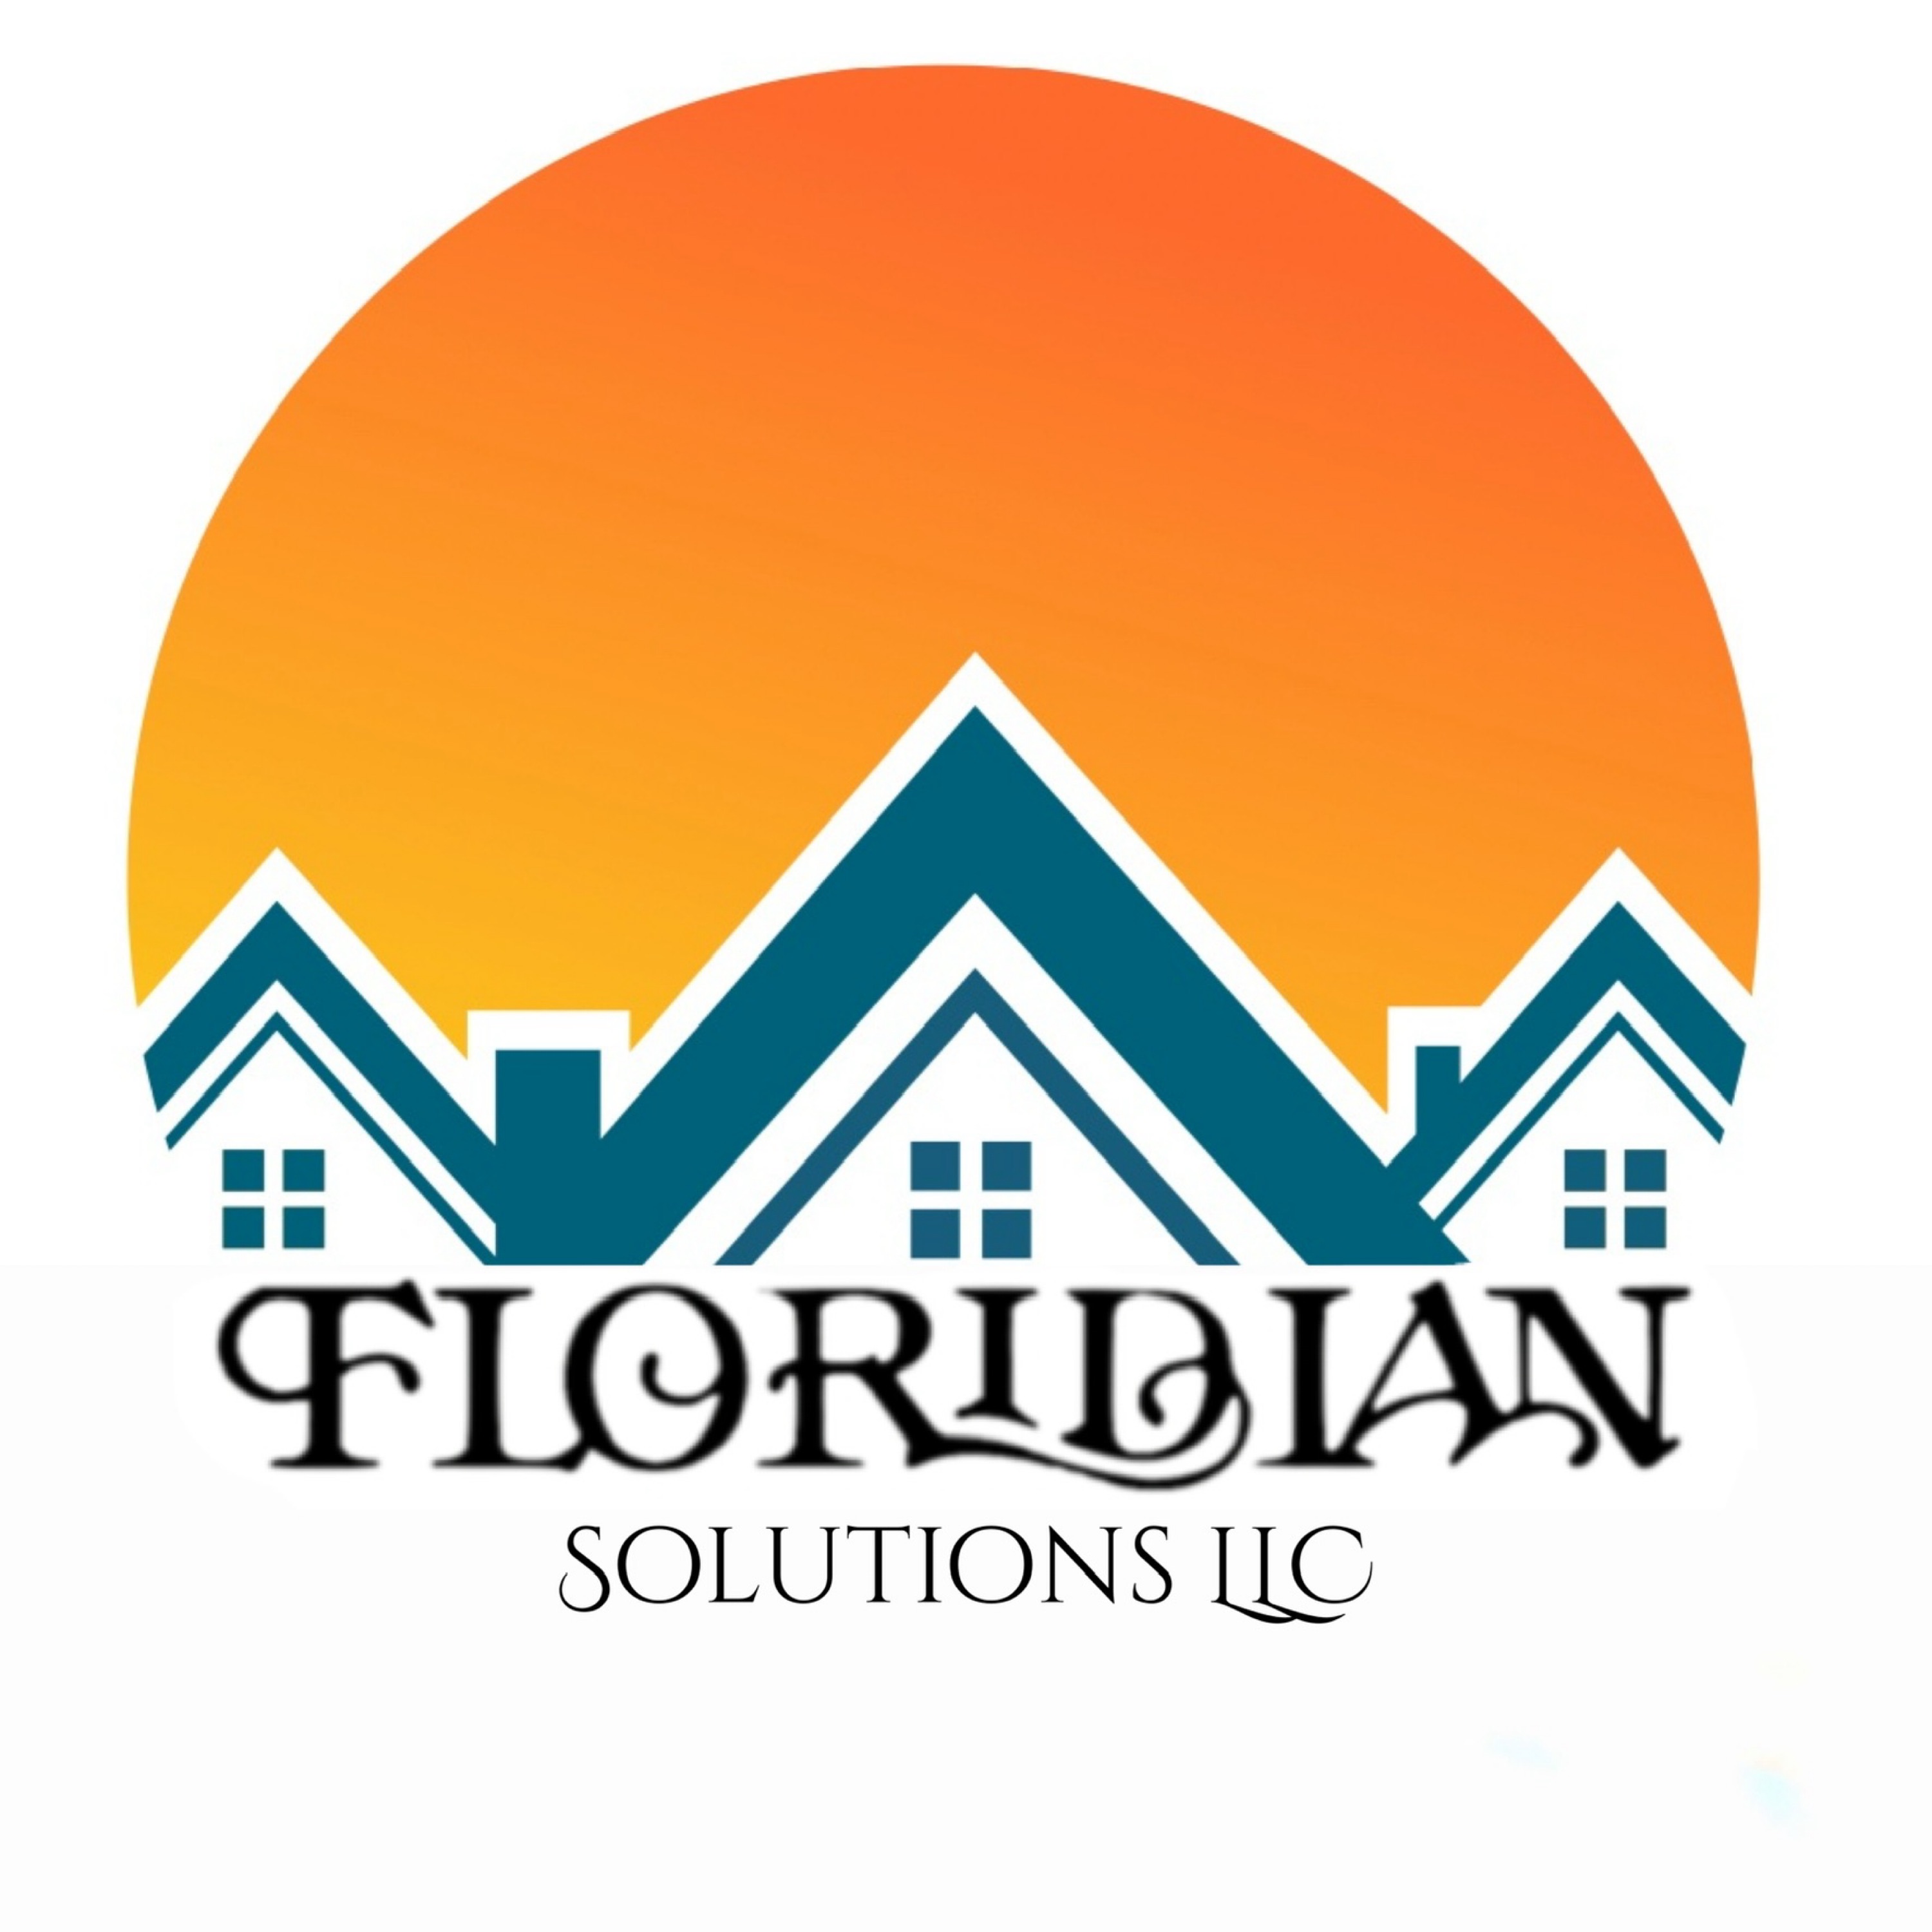 Floridan Solutions Logo